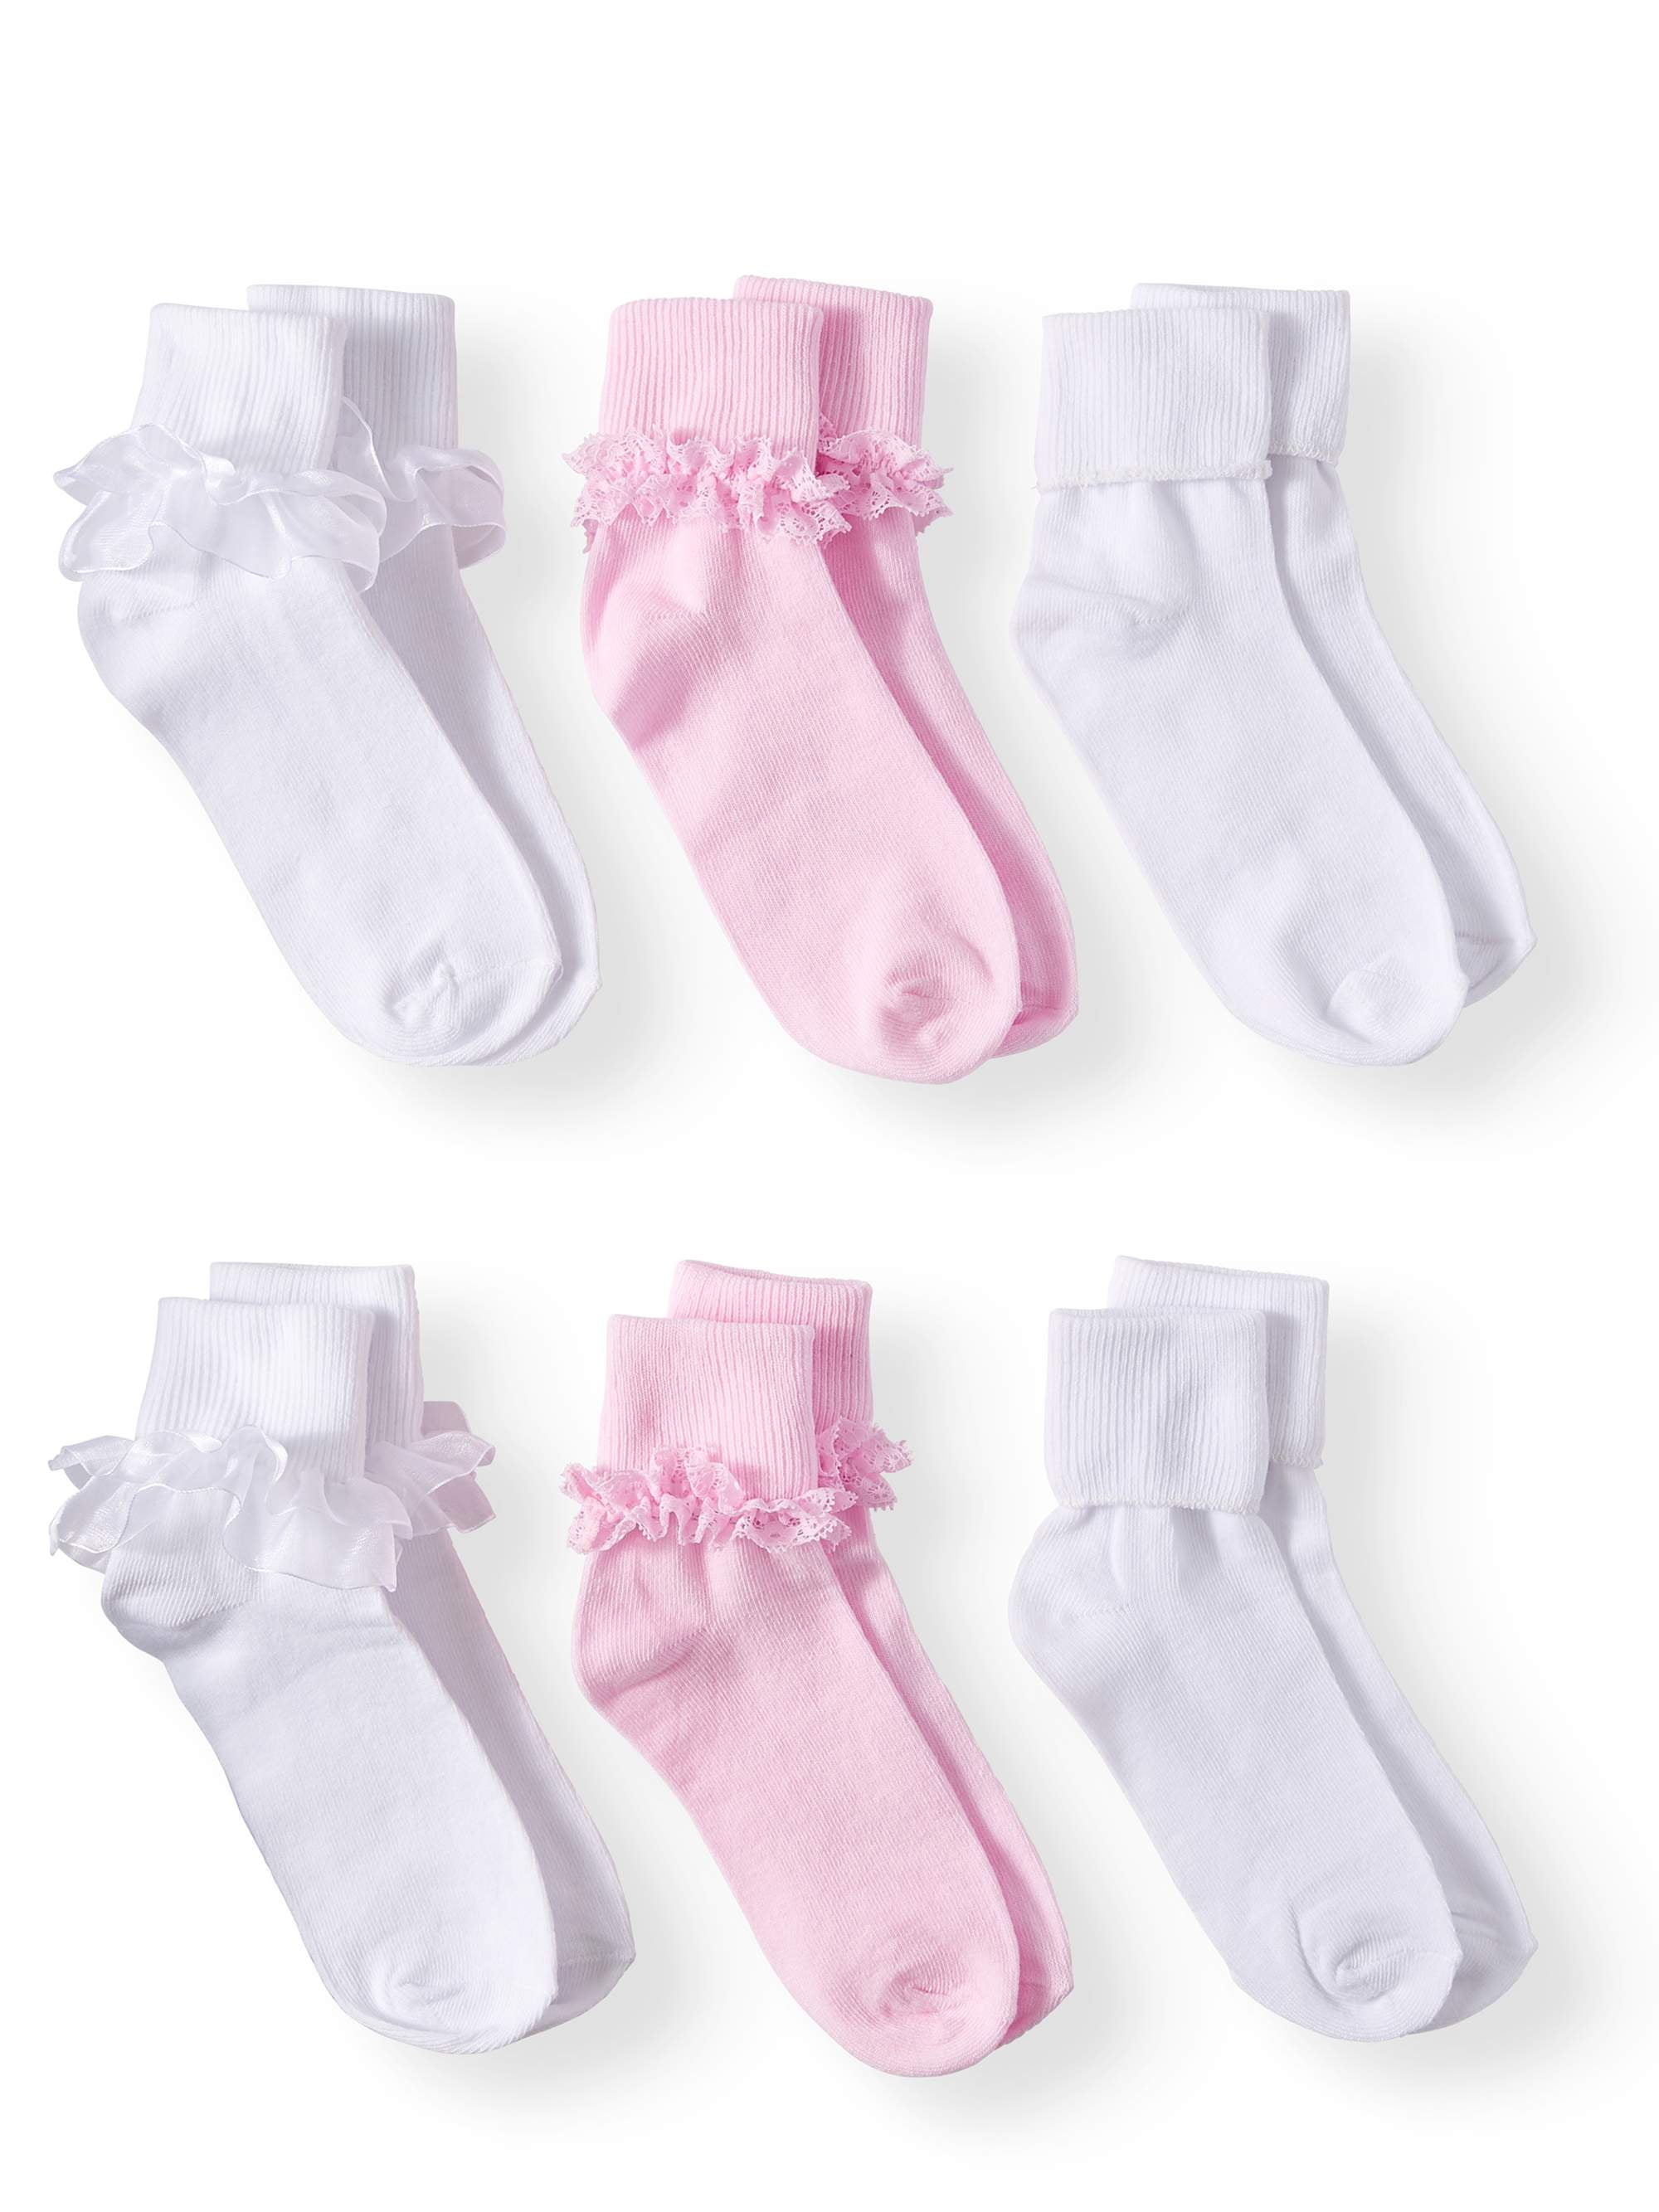 Wonder Nation Girls' no show socks M or L 10 pk girls' size S multi-colors